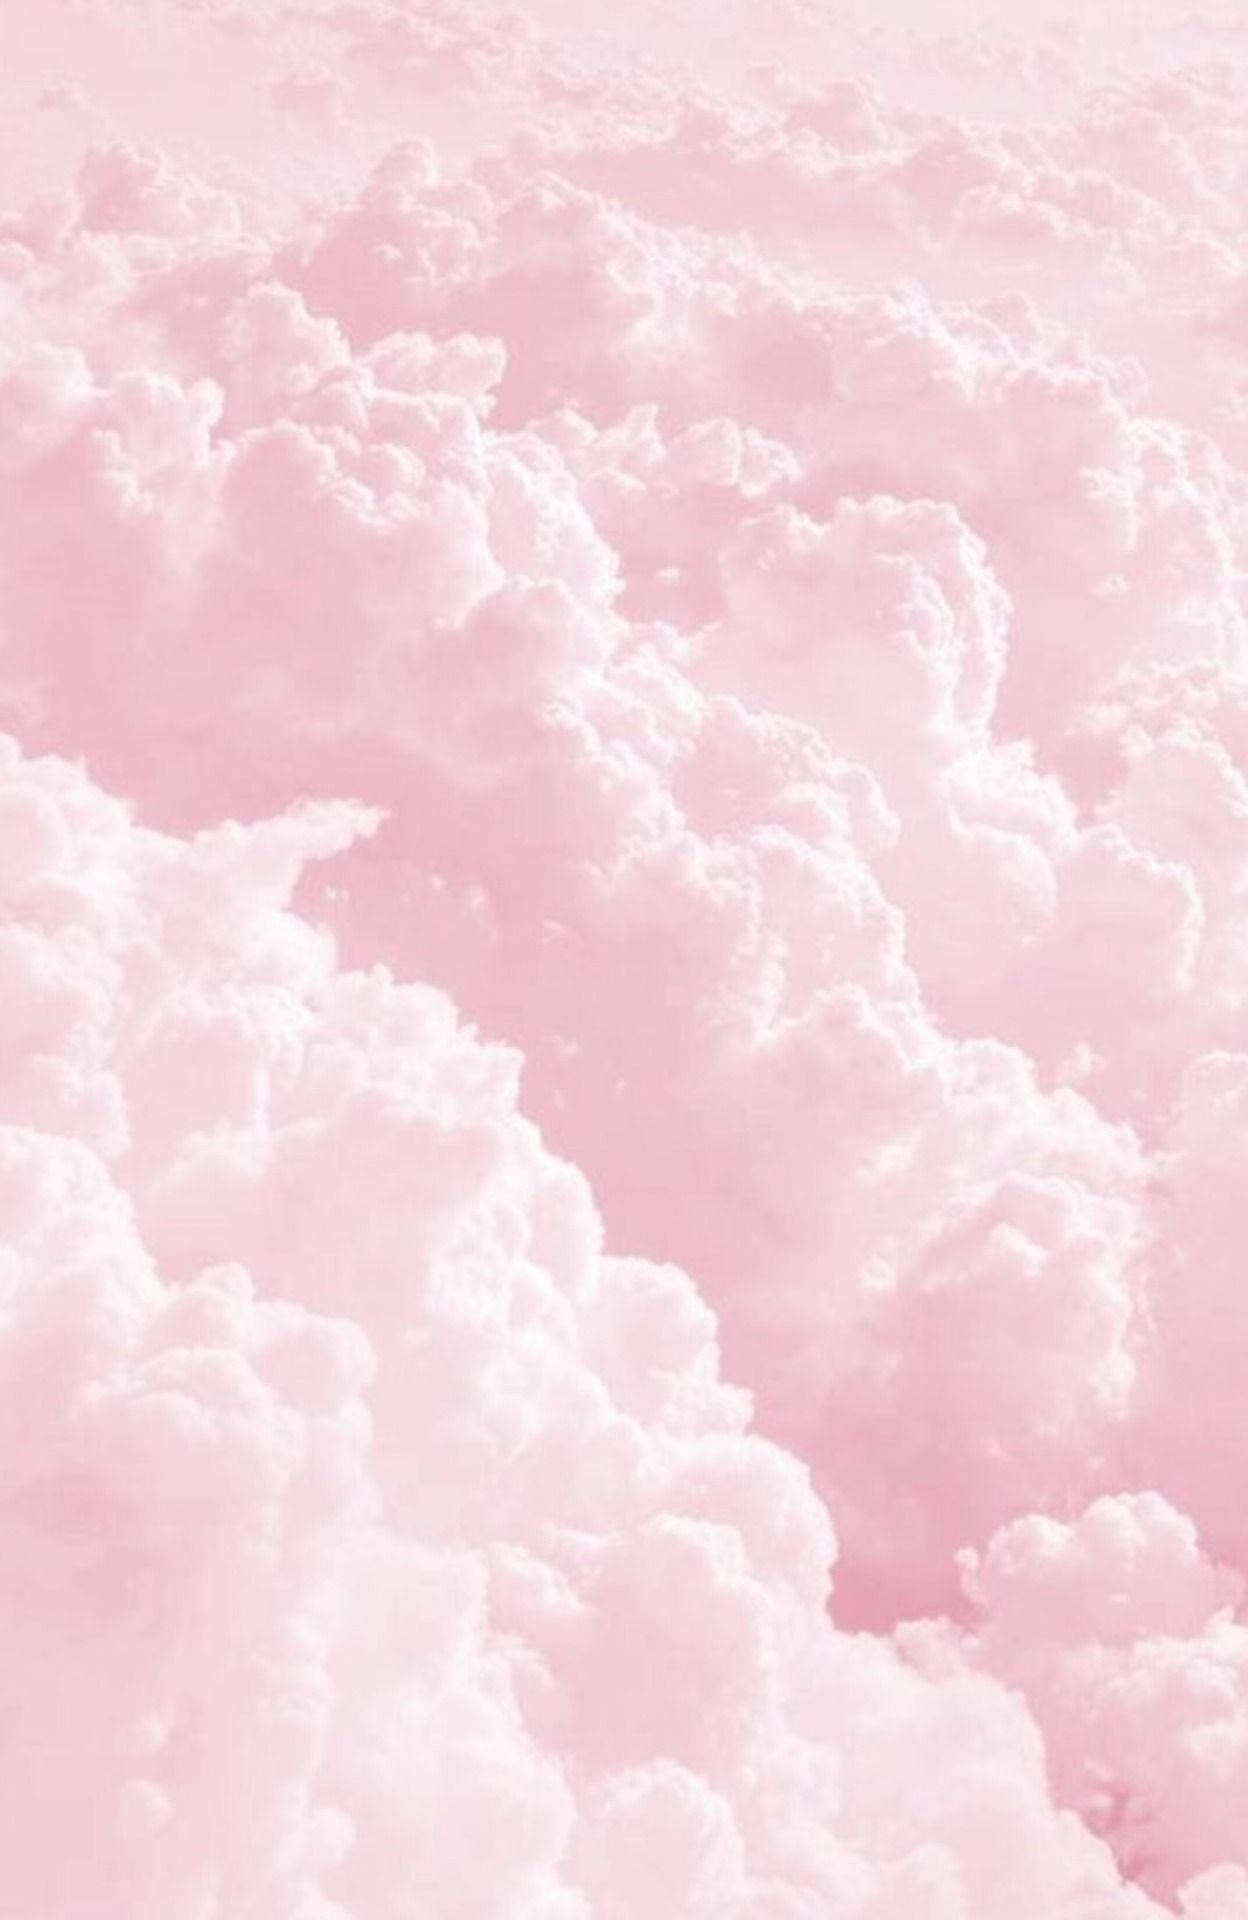 Cute Pink Aesthetic Cumulus Clouds In Sky Background